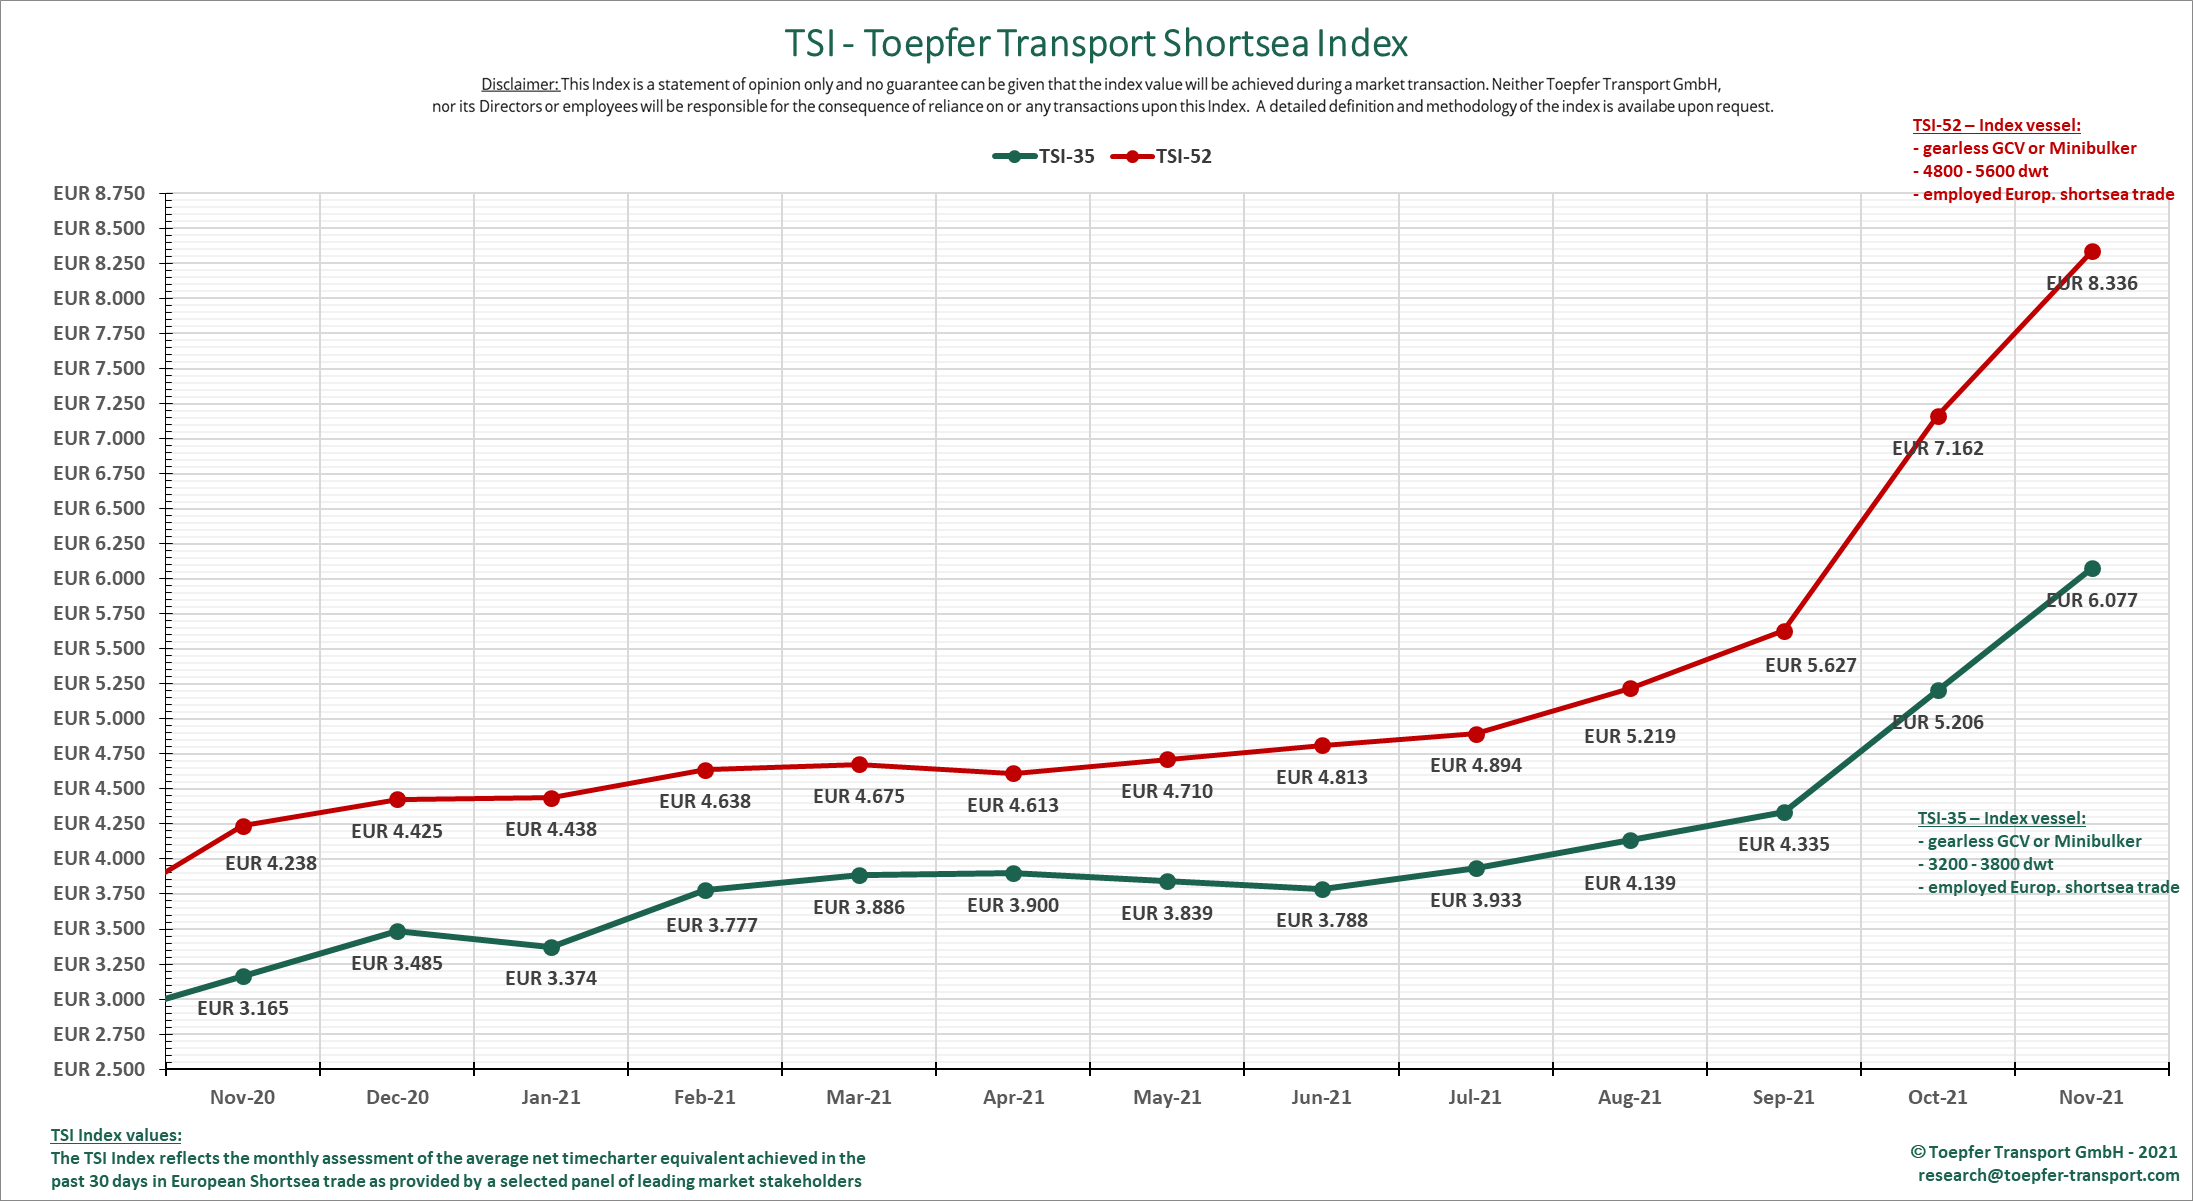 Toepfer's Shortsea Index, November 2021